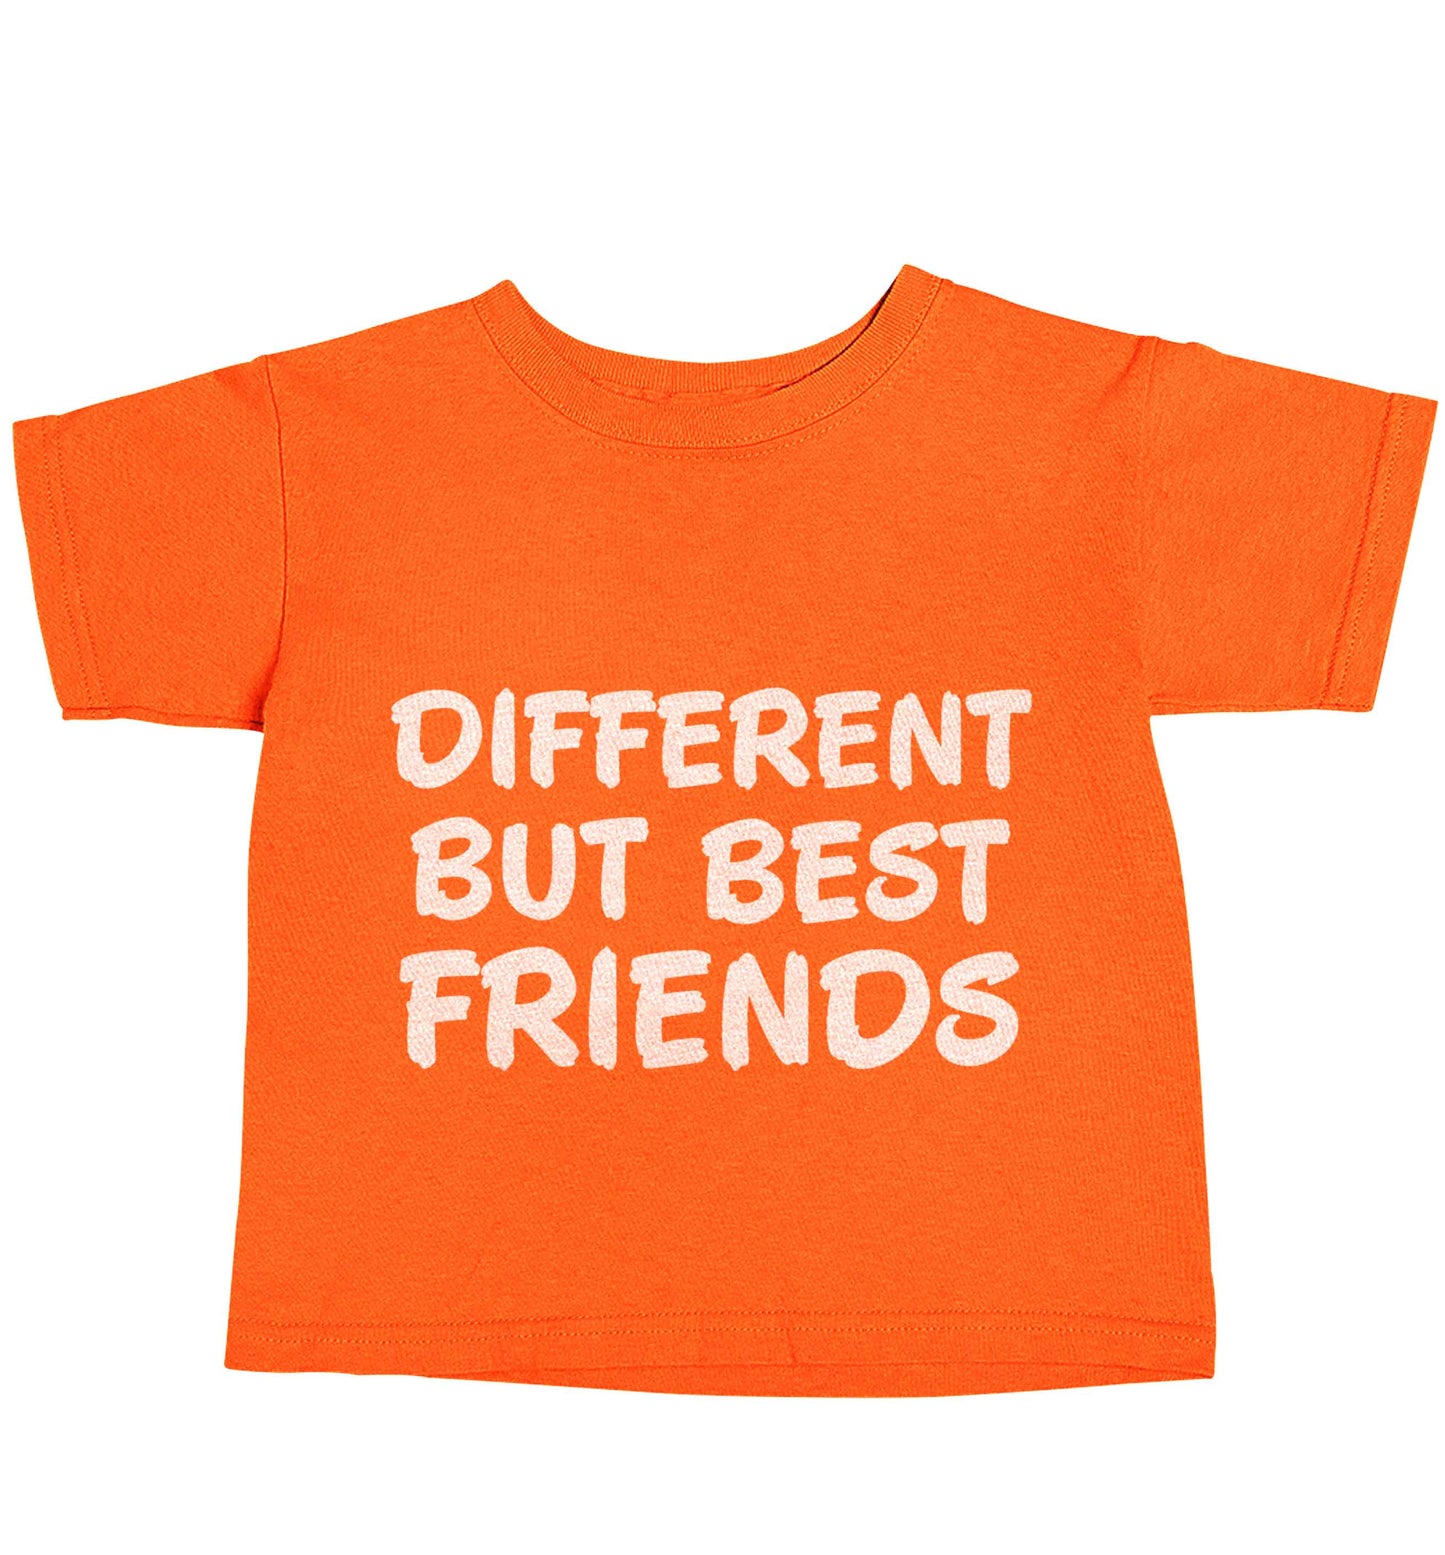 Different but best friends orange baby toddler Tshirt 2 Years